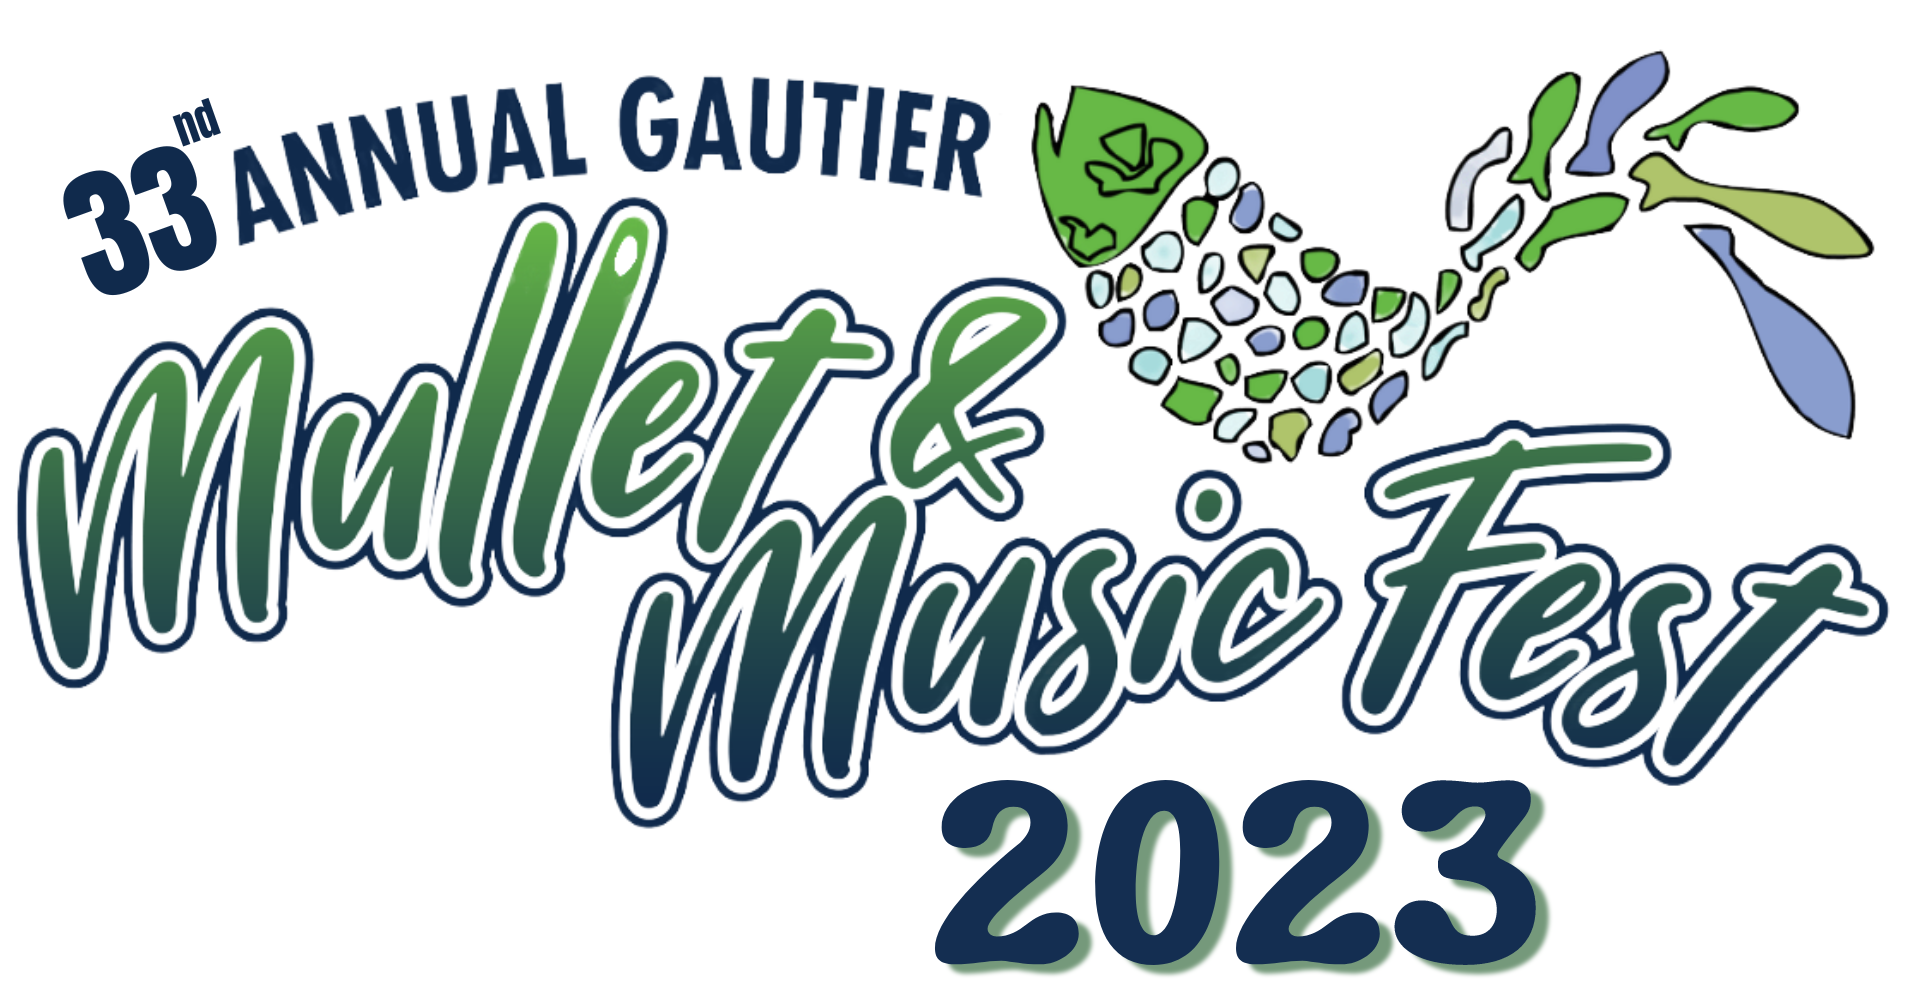 33nd Annual Gautier Mullet Festival 2022 Official website